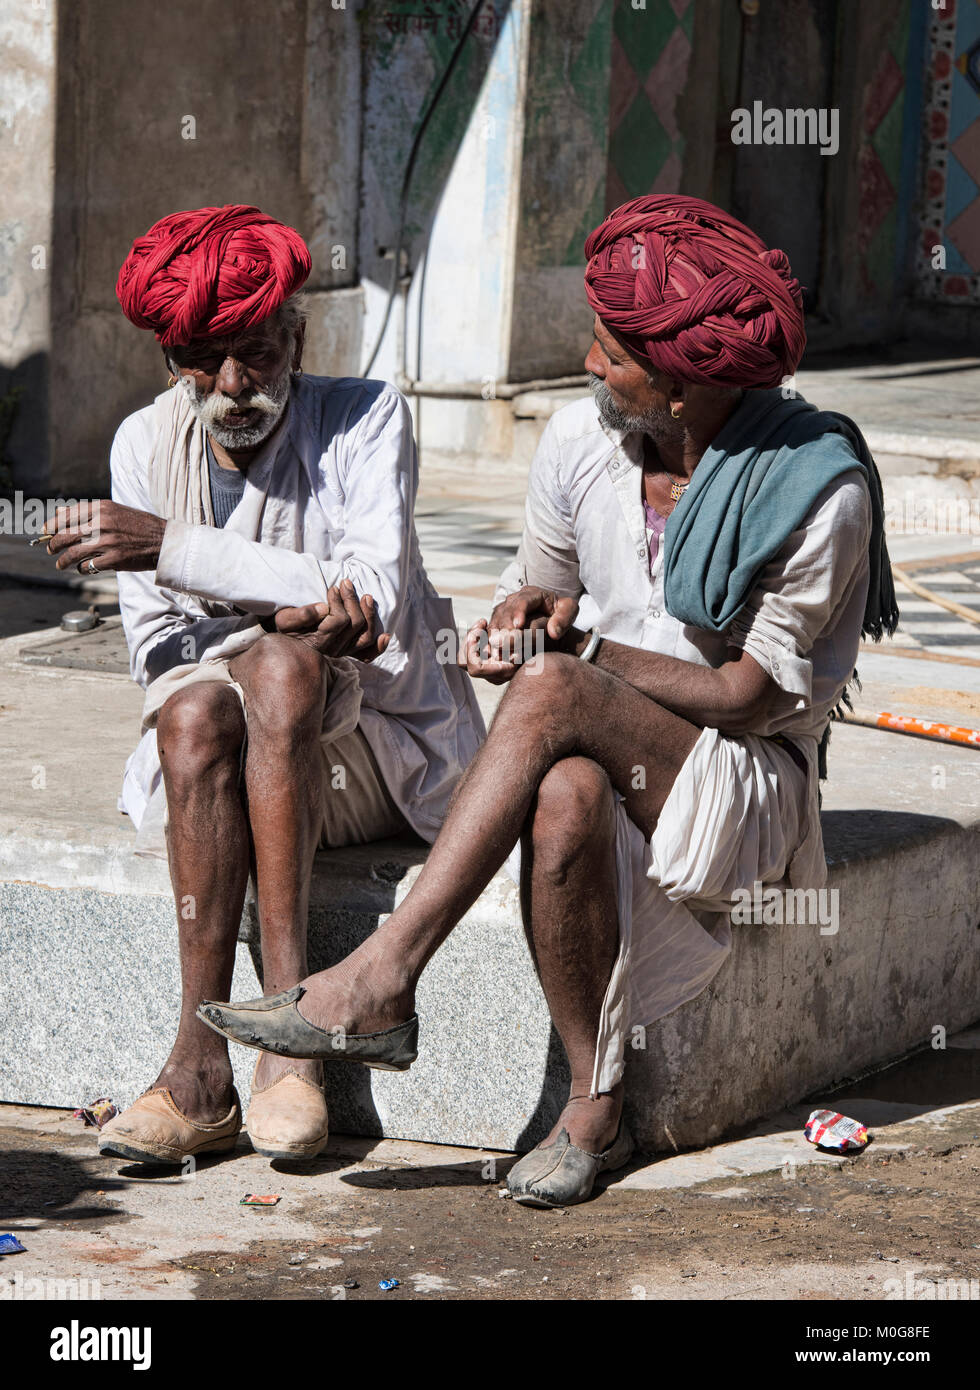 Rajasthani buddies with turbans talking it over, Pushkar, India Stock Photo